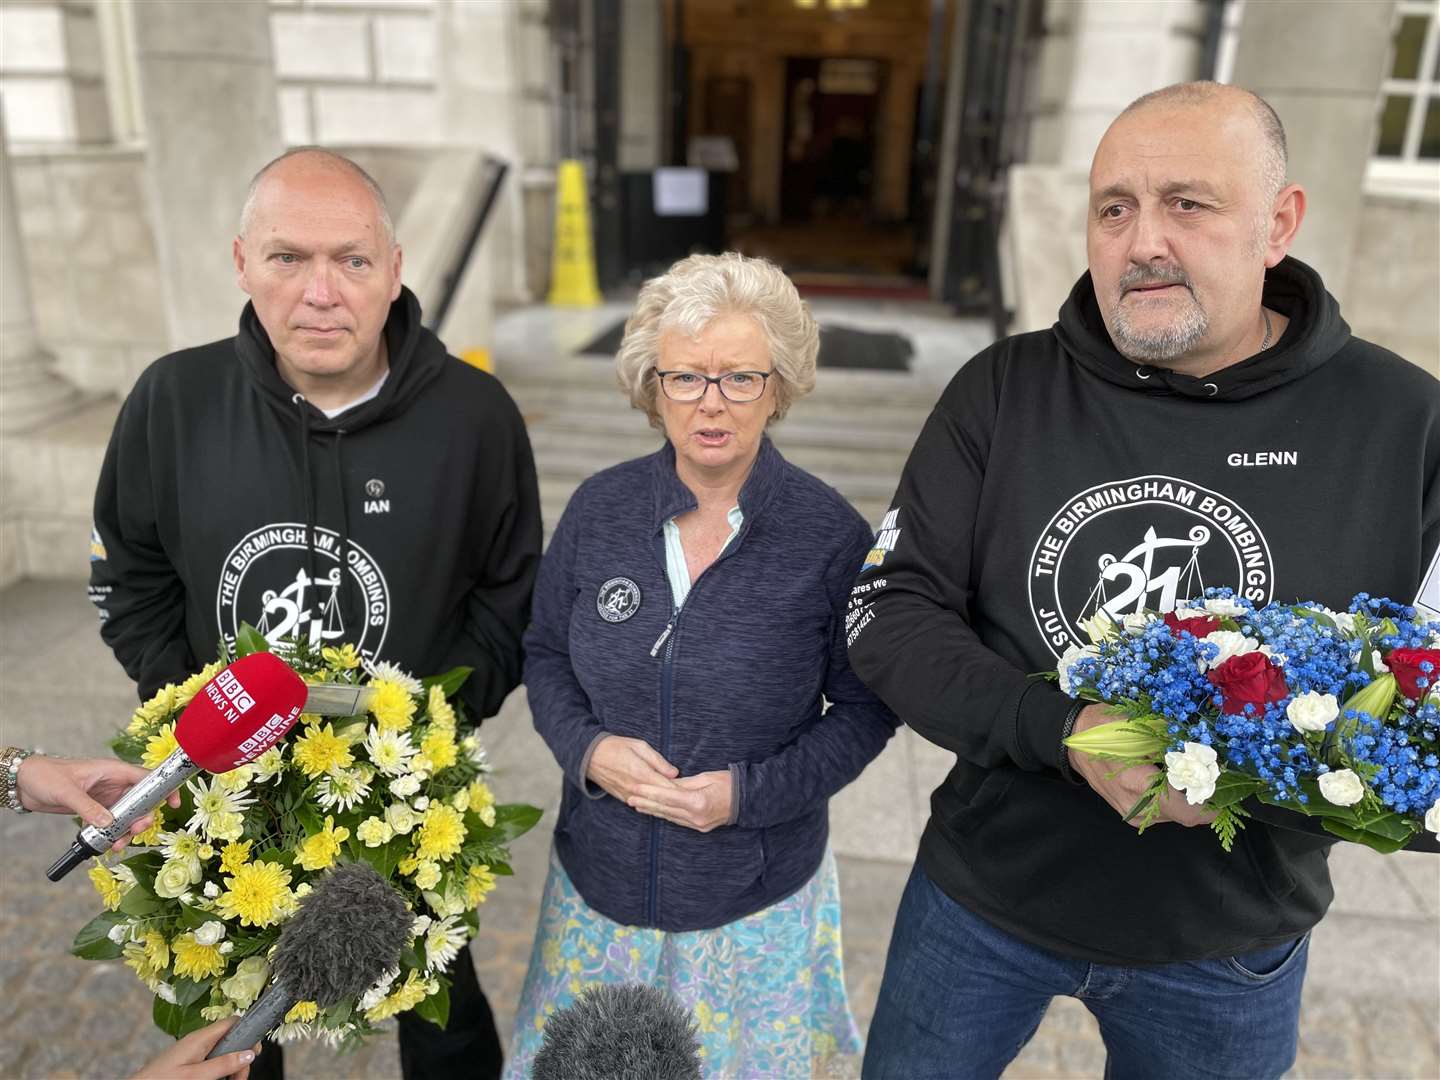 Ian Williams, Julie Hambleton and Glenn Randall outside Belfast City Hall (David Young/PA)